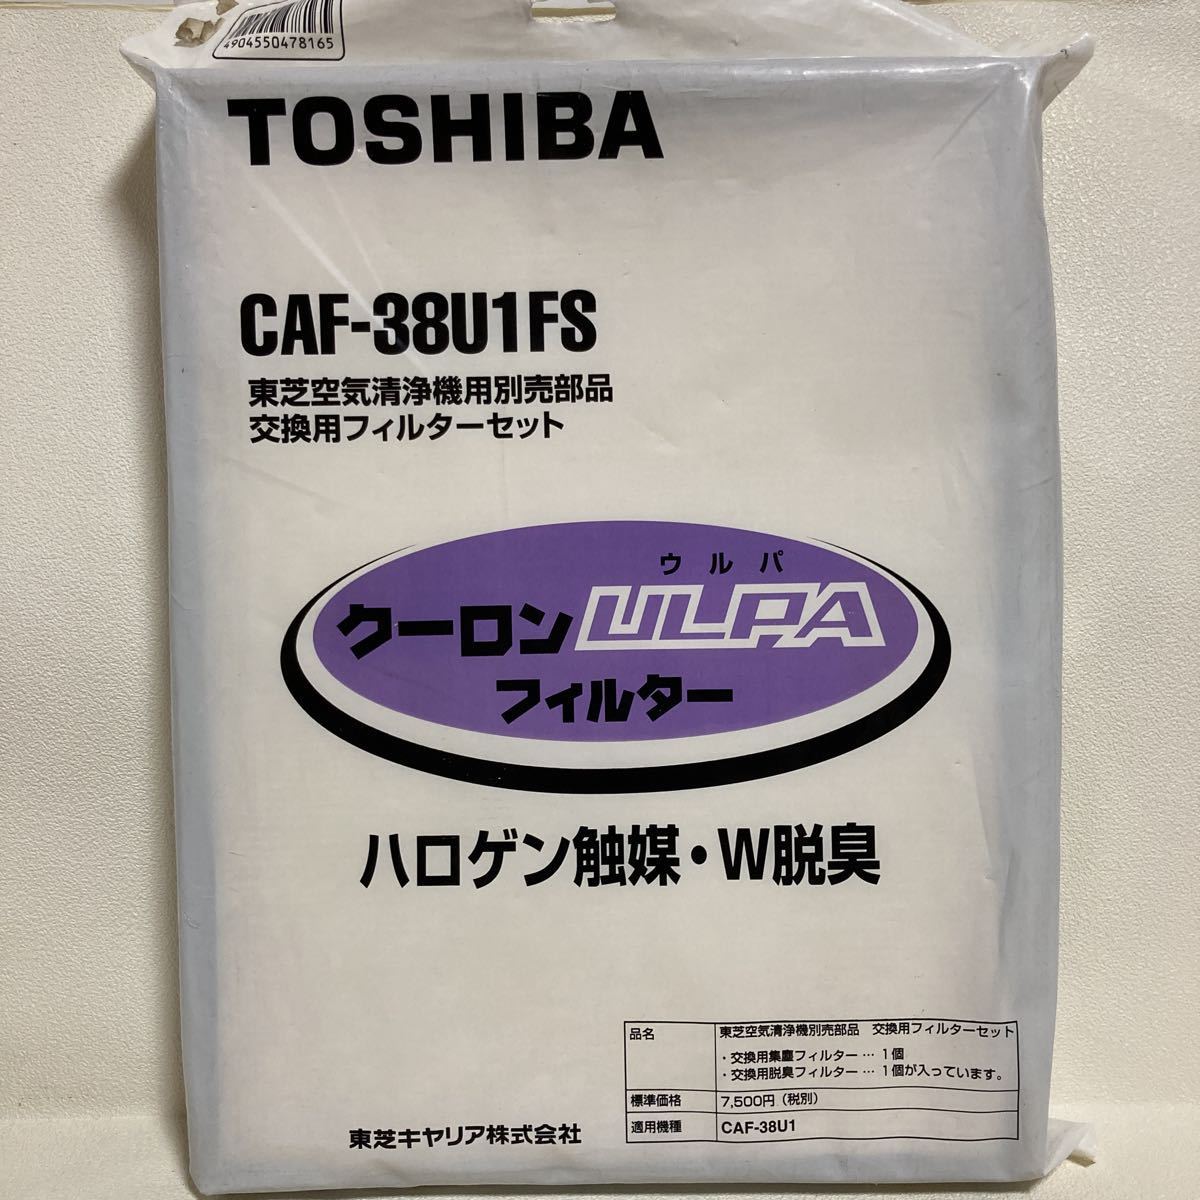 TOSHIBA 東芝 空気清浄機 速清快 クーロンULPAフィルター 交換フィルター CAF-38U1FS 適用機種 CAF-38U1